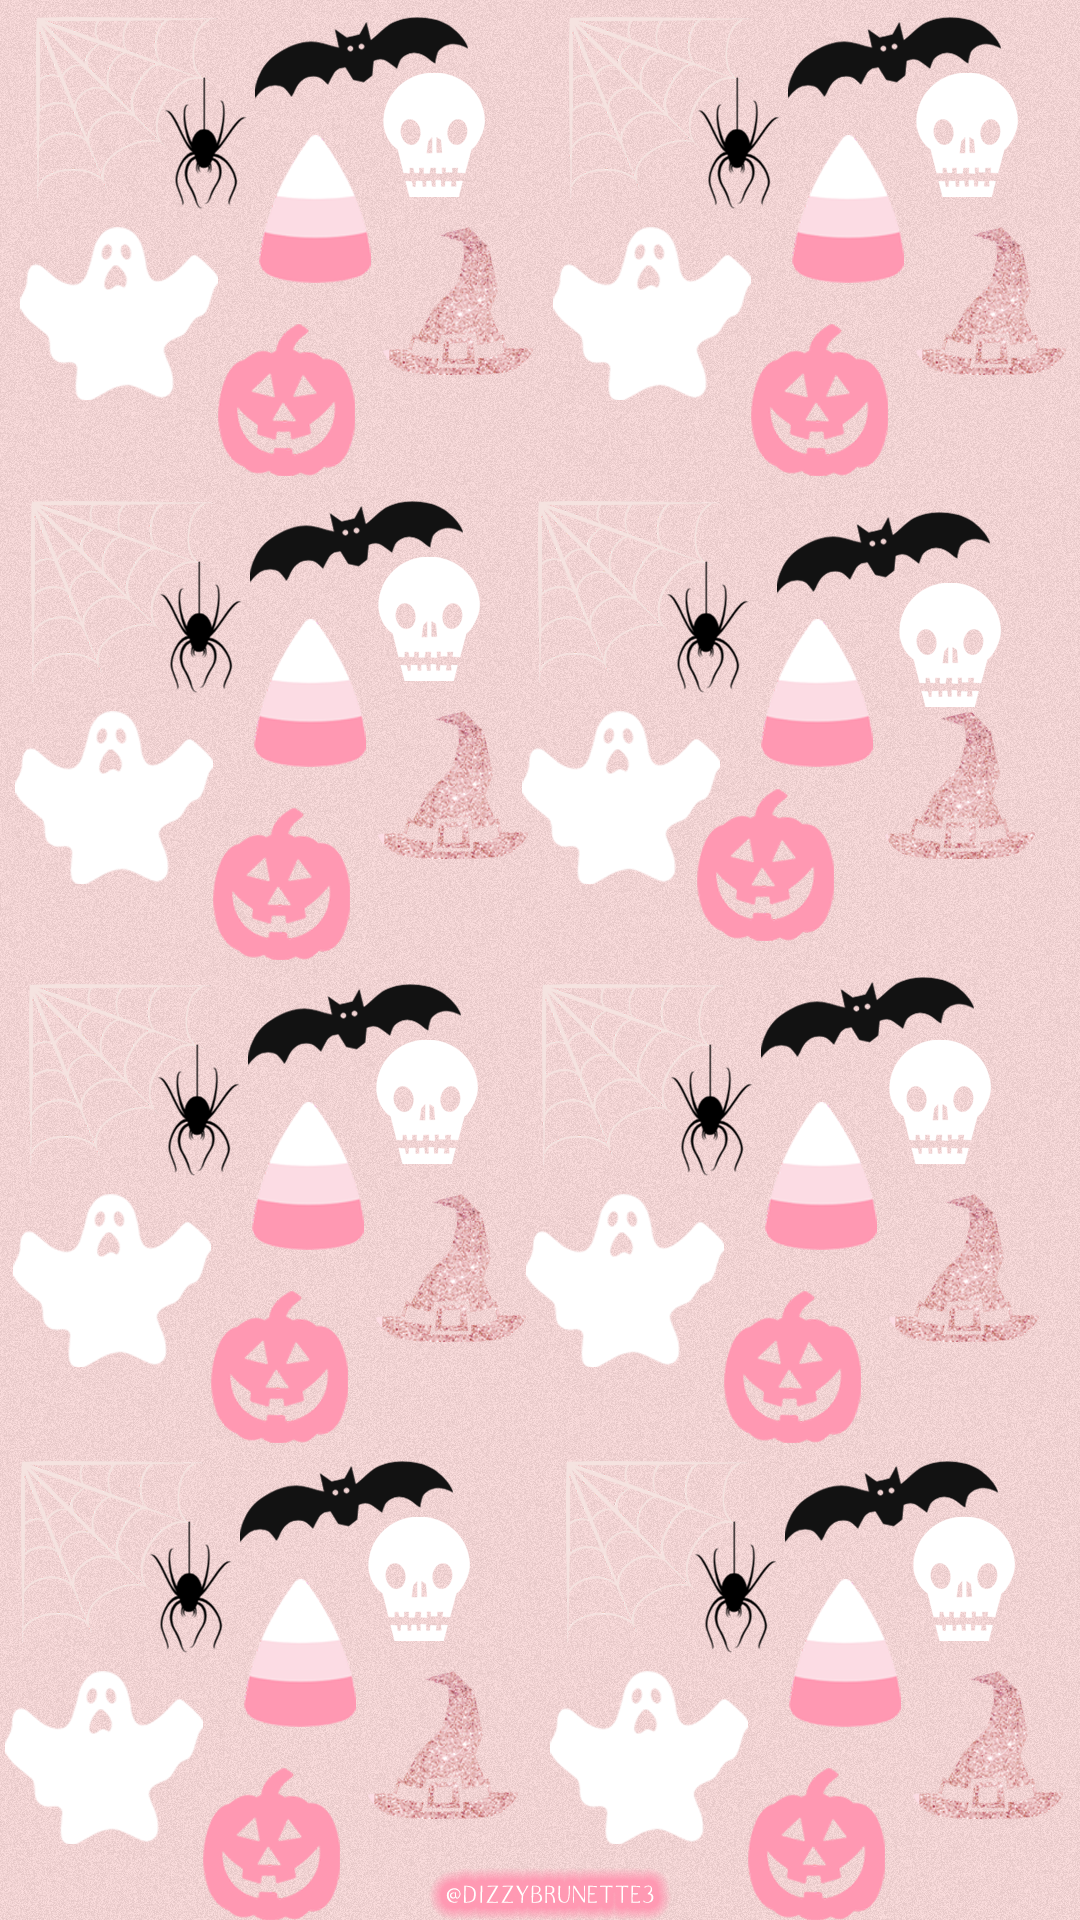 More Cute Halloween Wallpaper!. Halloween wallpaper iphone, Halloween wallpaper, Halloween wallpaper cute